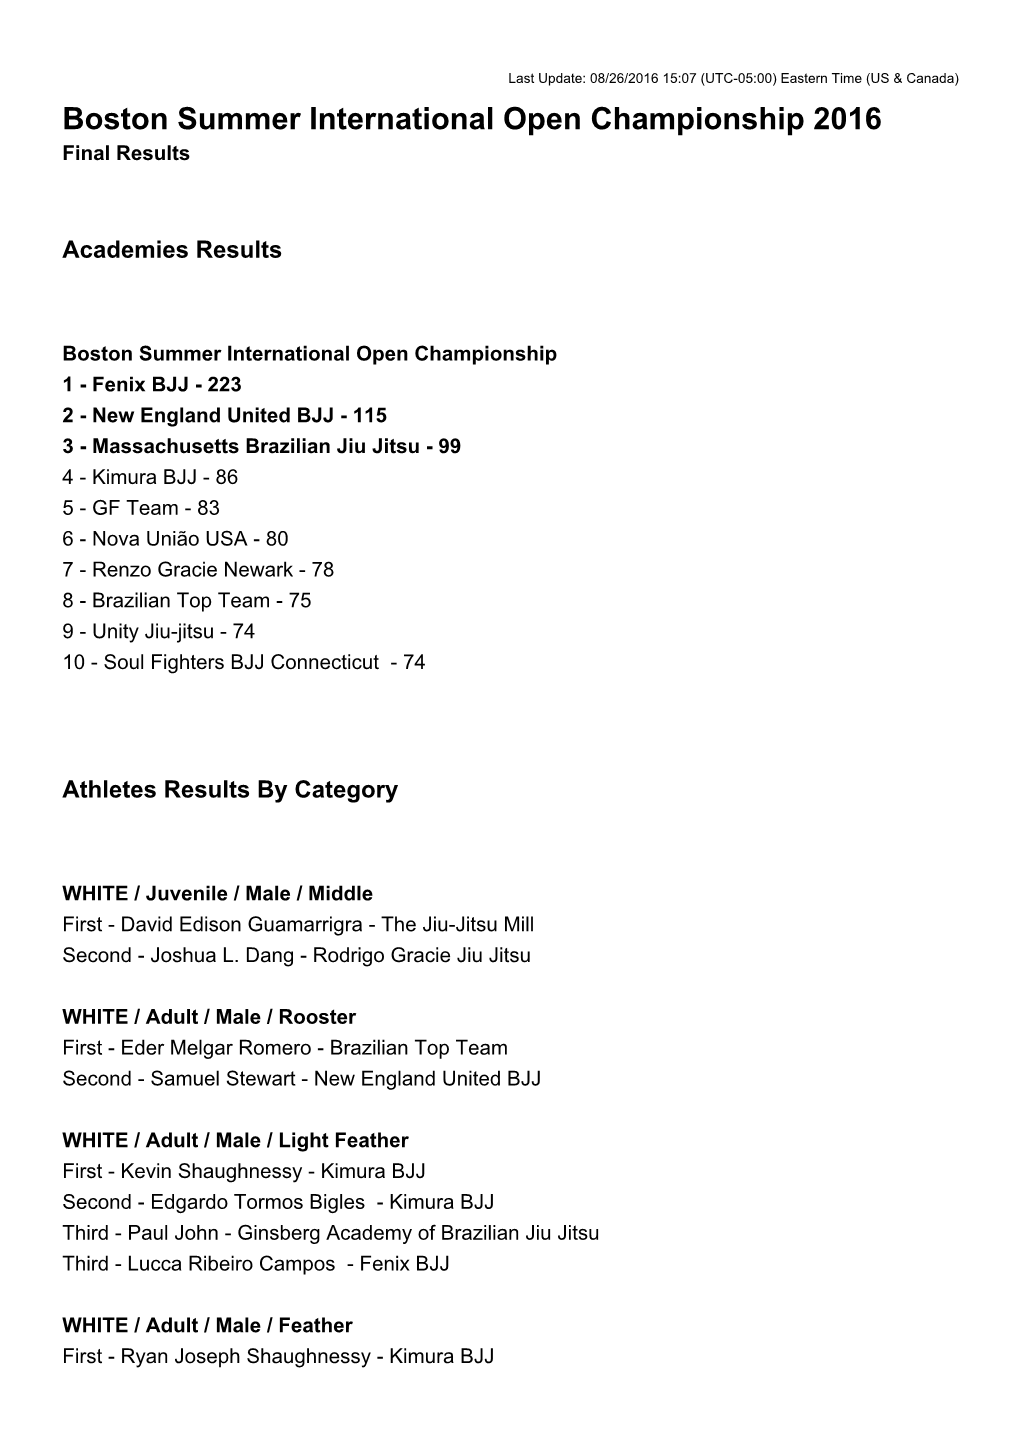 Boston Summer International Open Championship 2016 Final Results